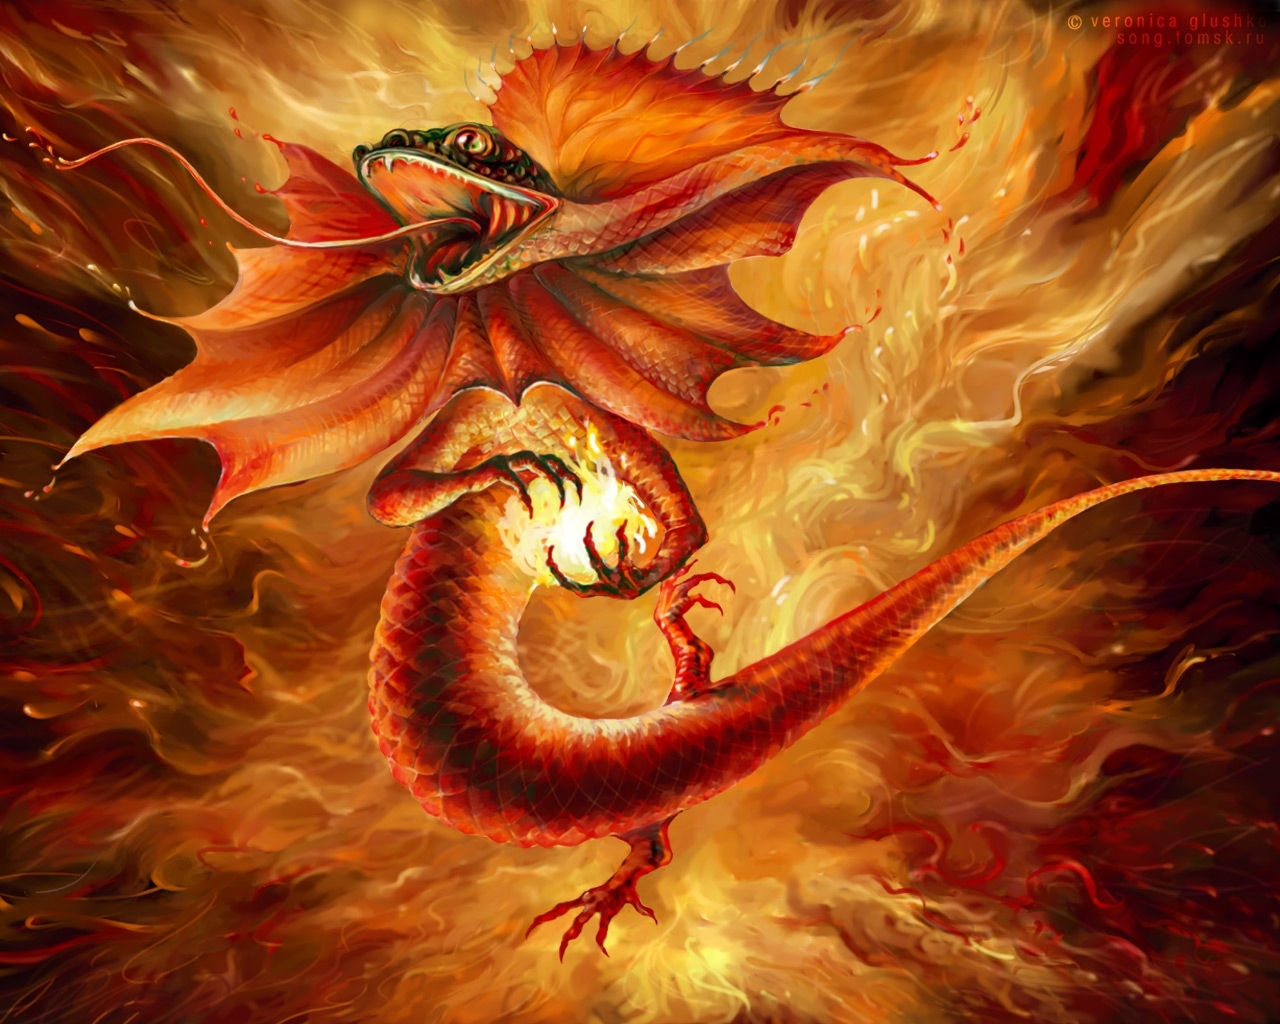 Phone wallpaper: Animals, Art, Dragons, Fire free download #791.